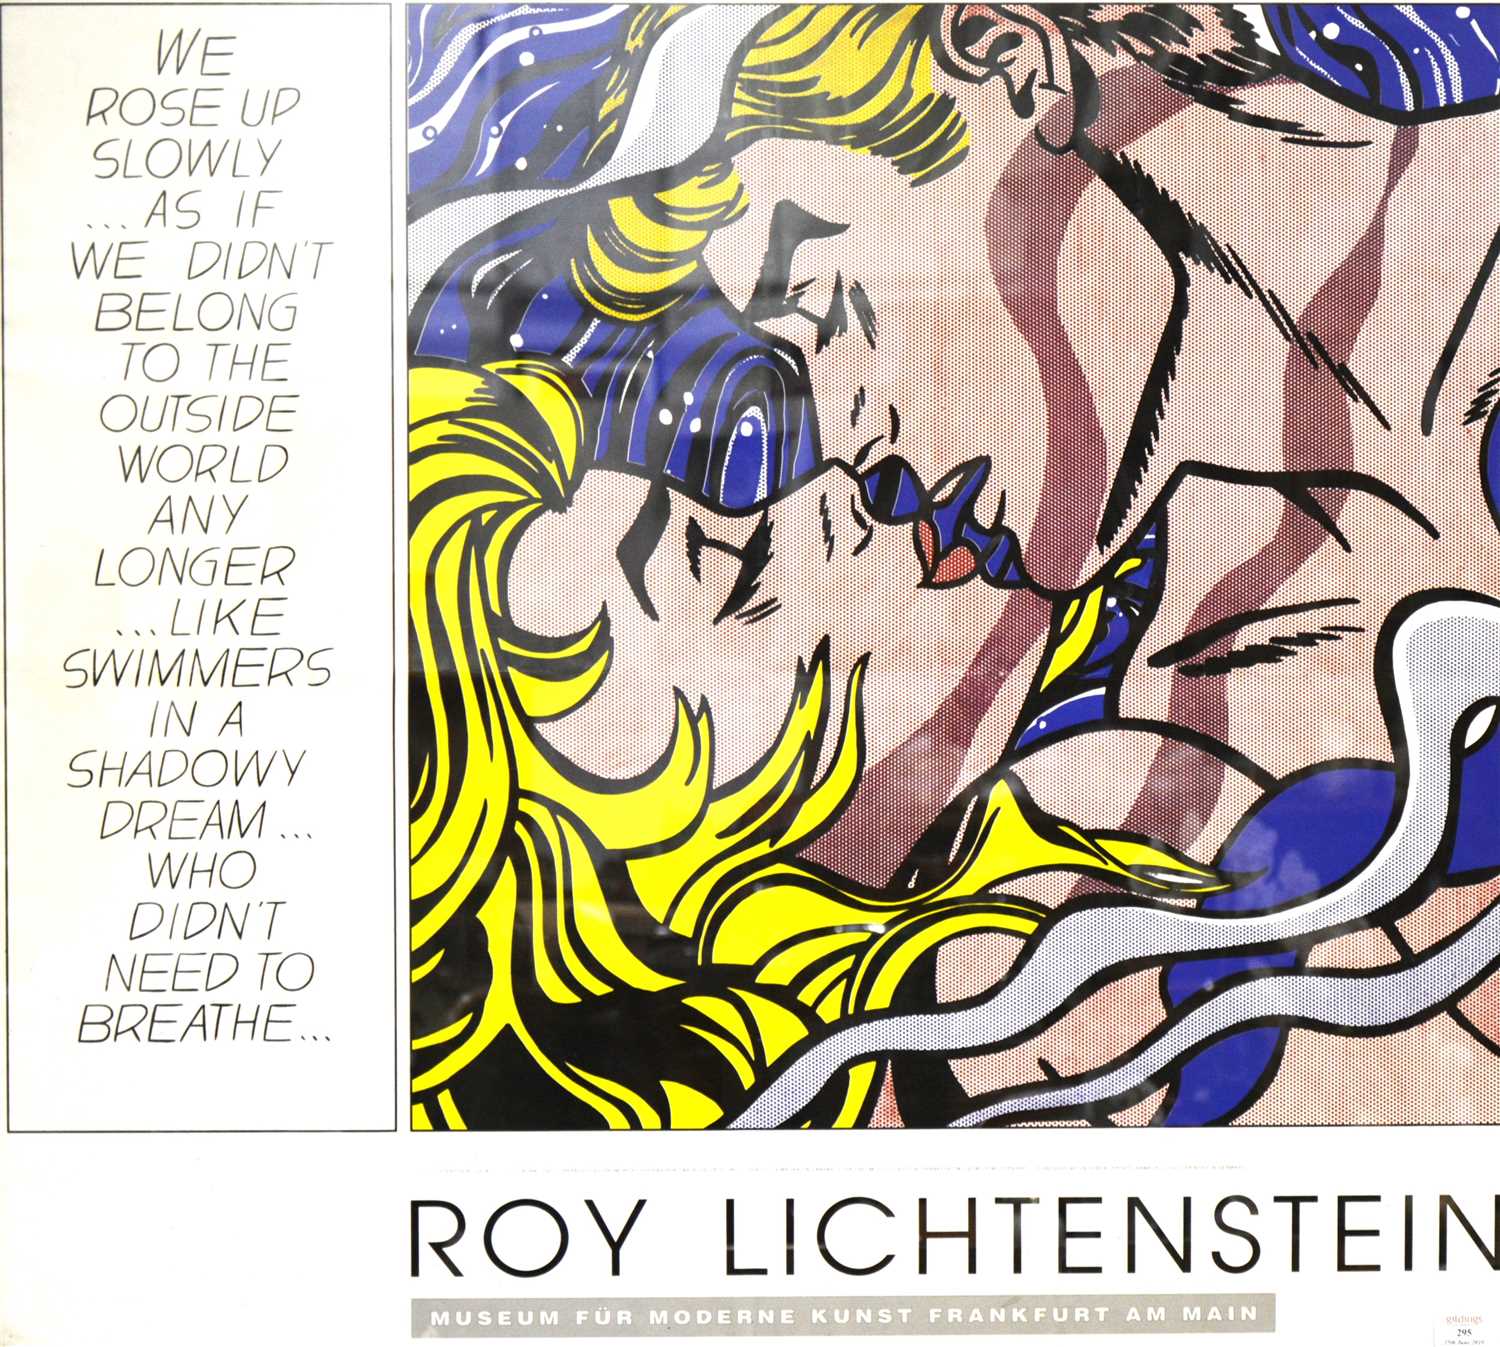 Lot 295 - Museum fur Moderne Kunst Frankfurt/ Roy Lichtenstein, We Rose Up Slowly